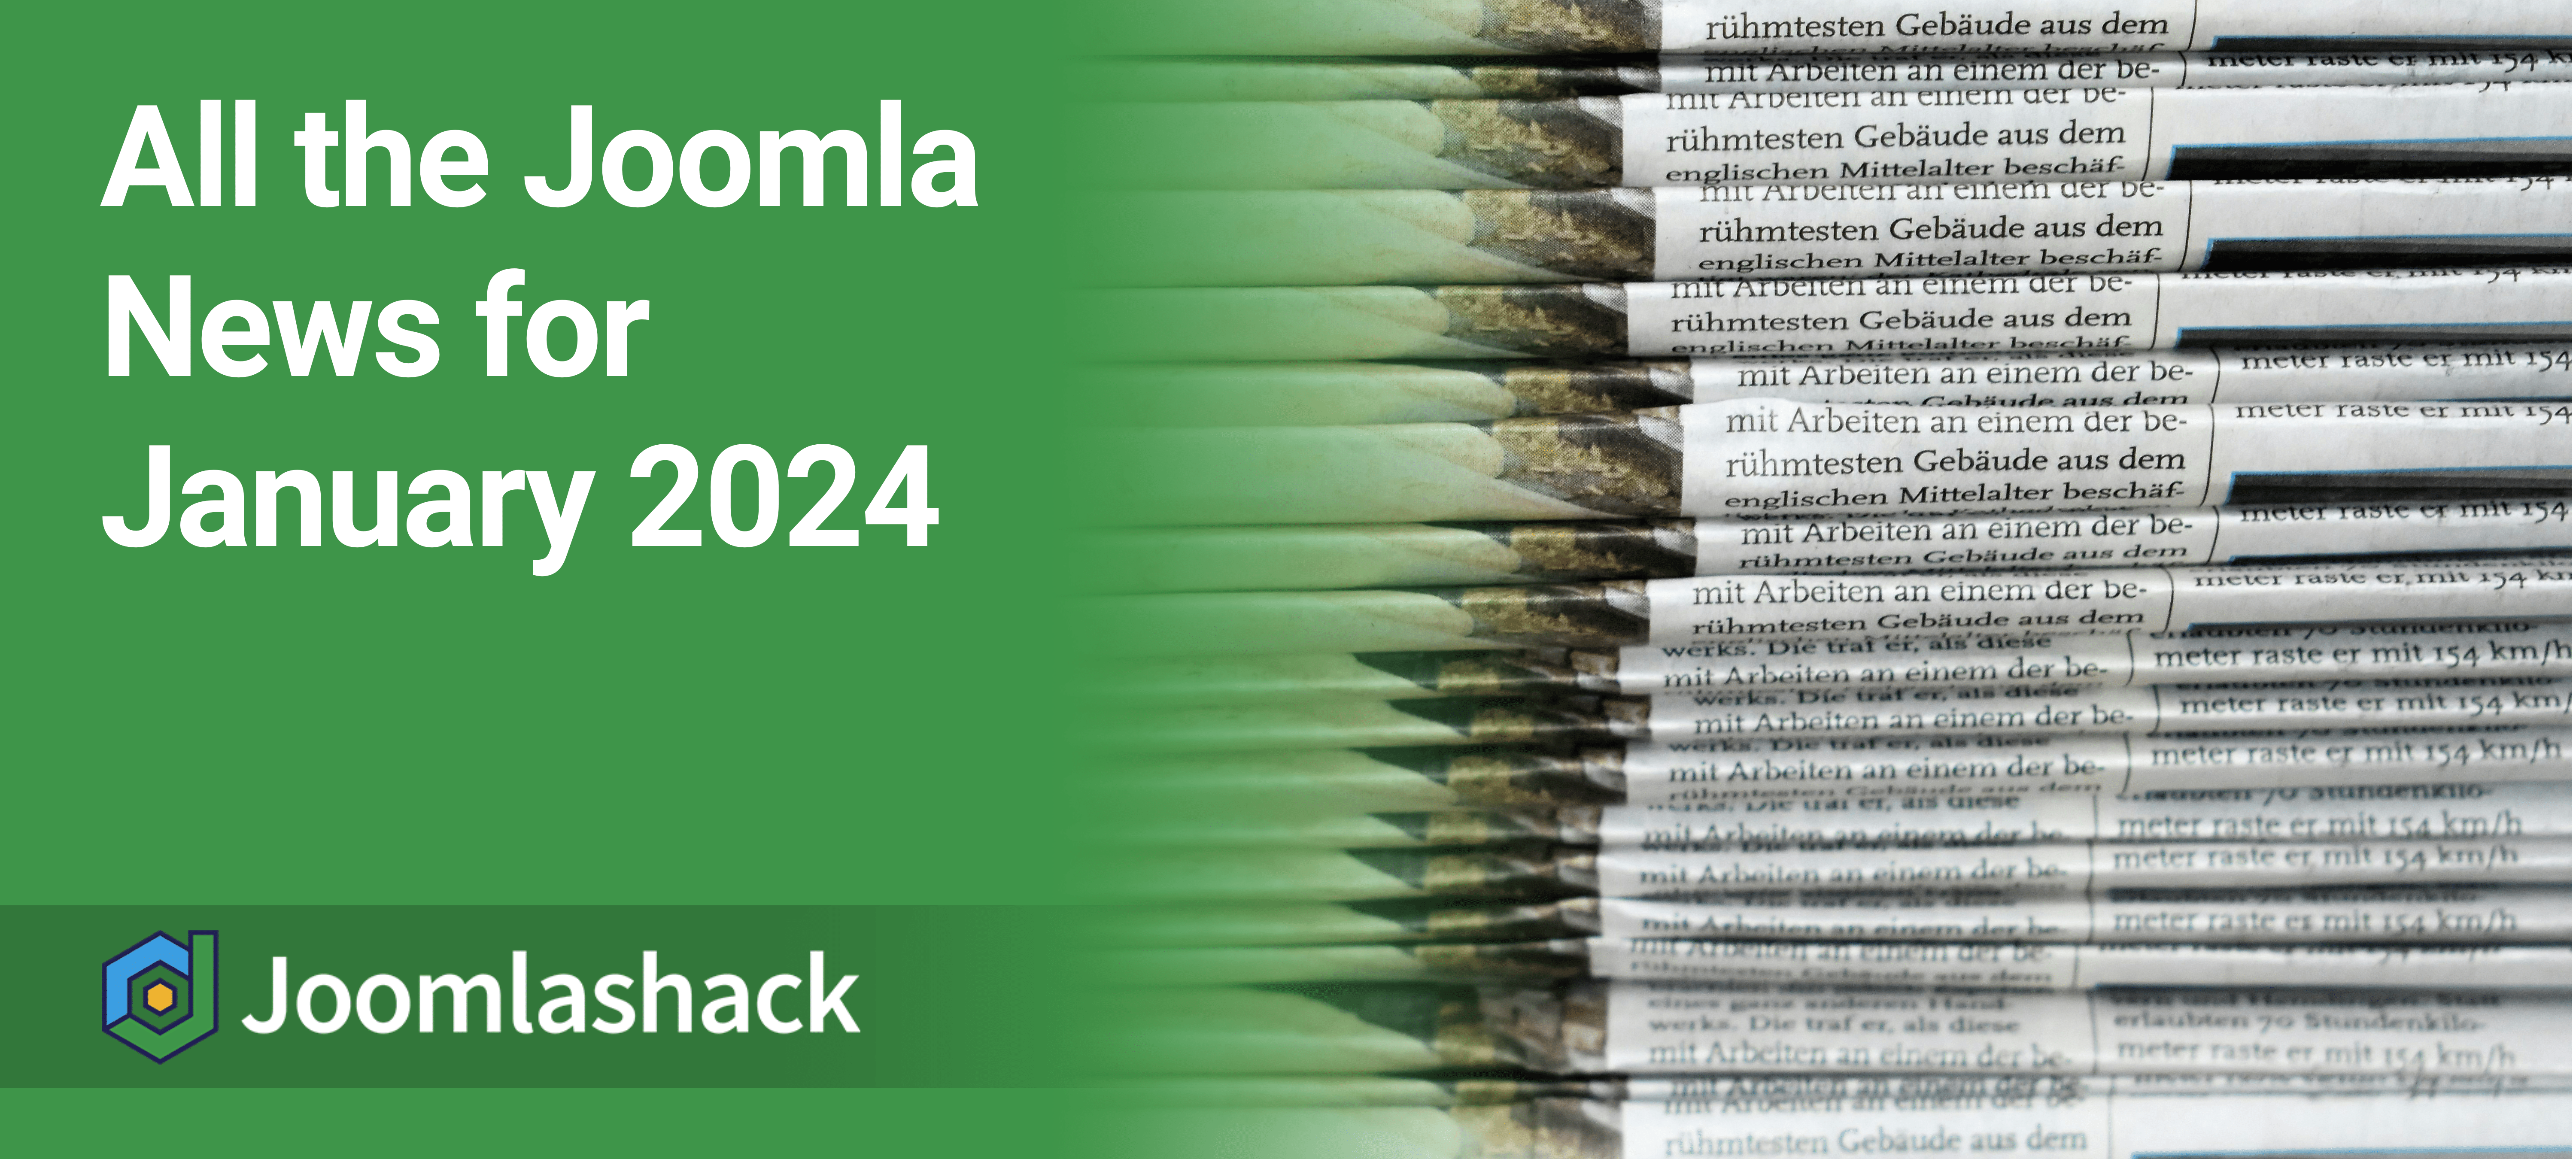 All the Joomla News for January 2024